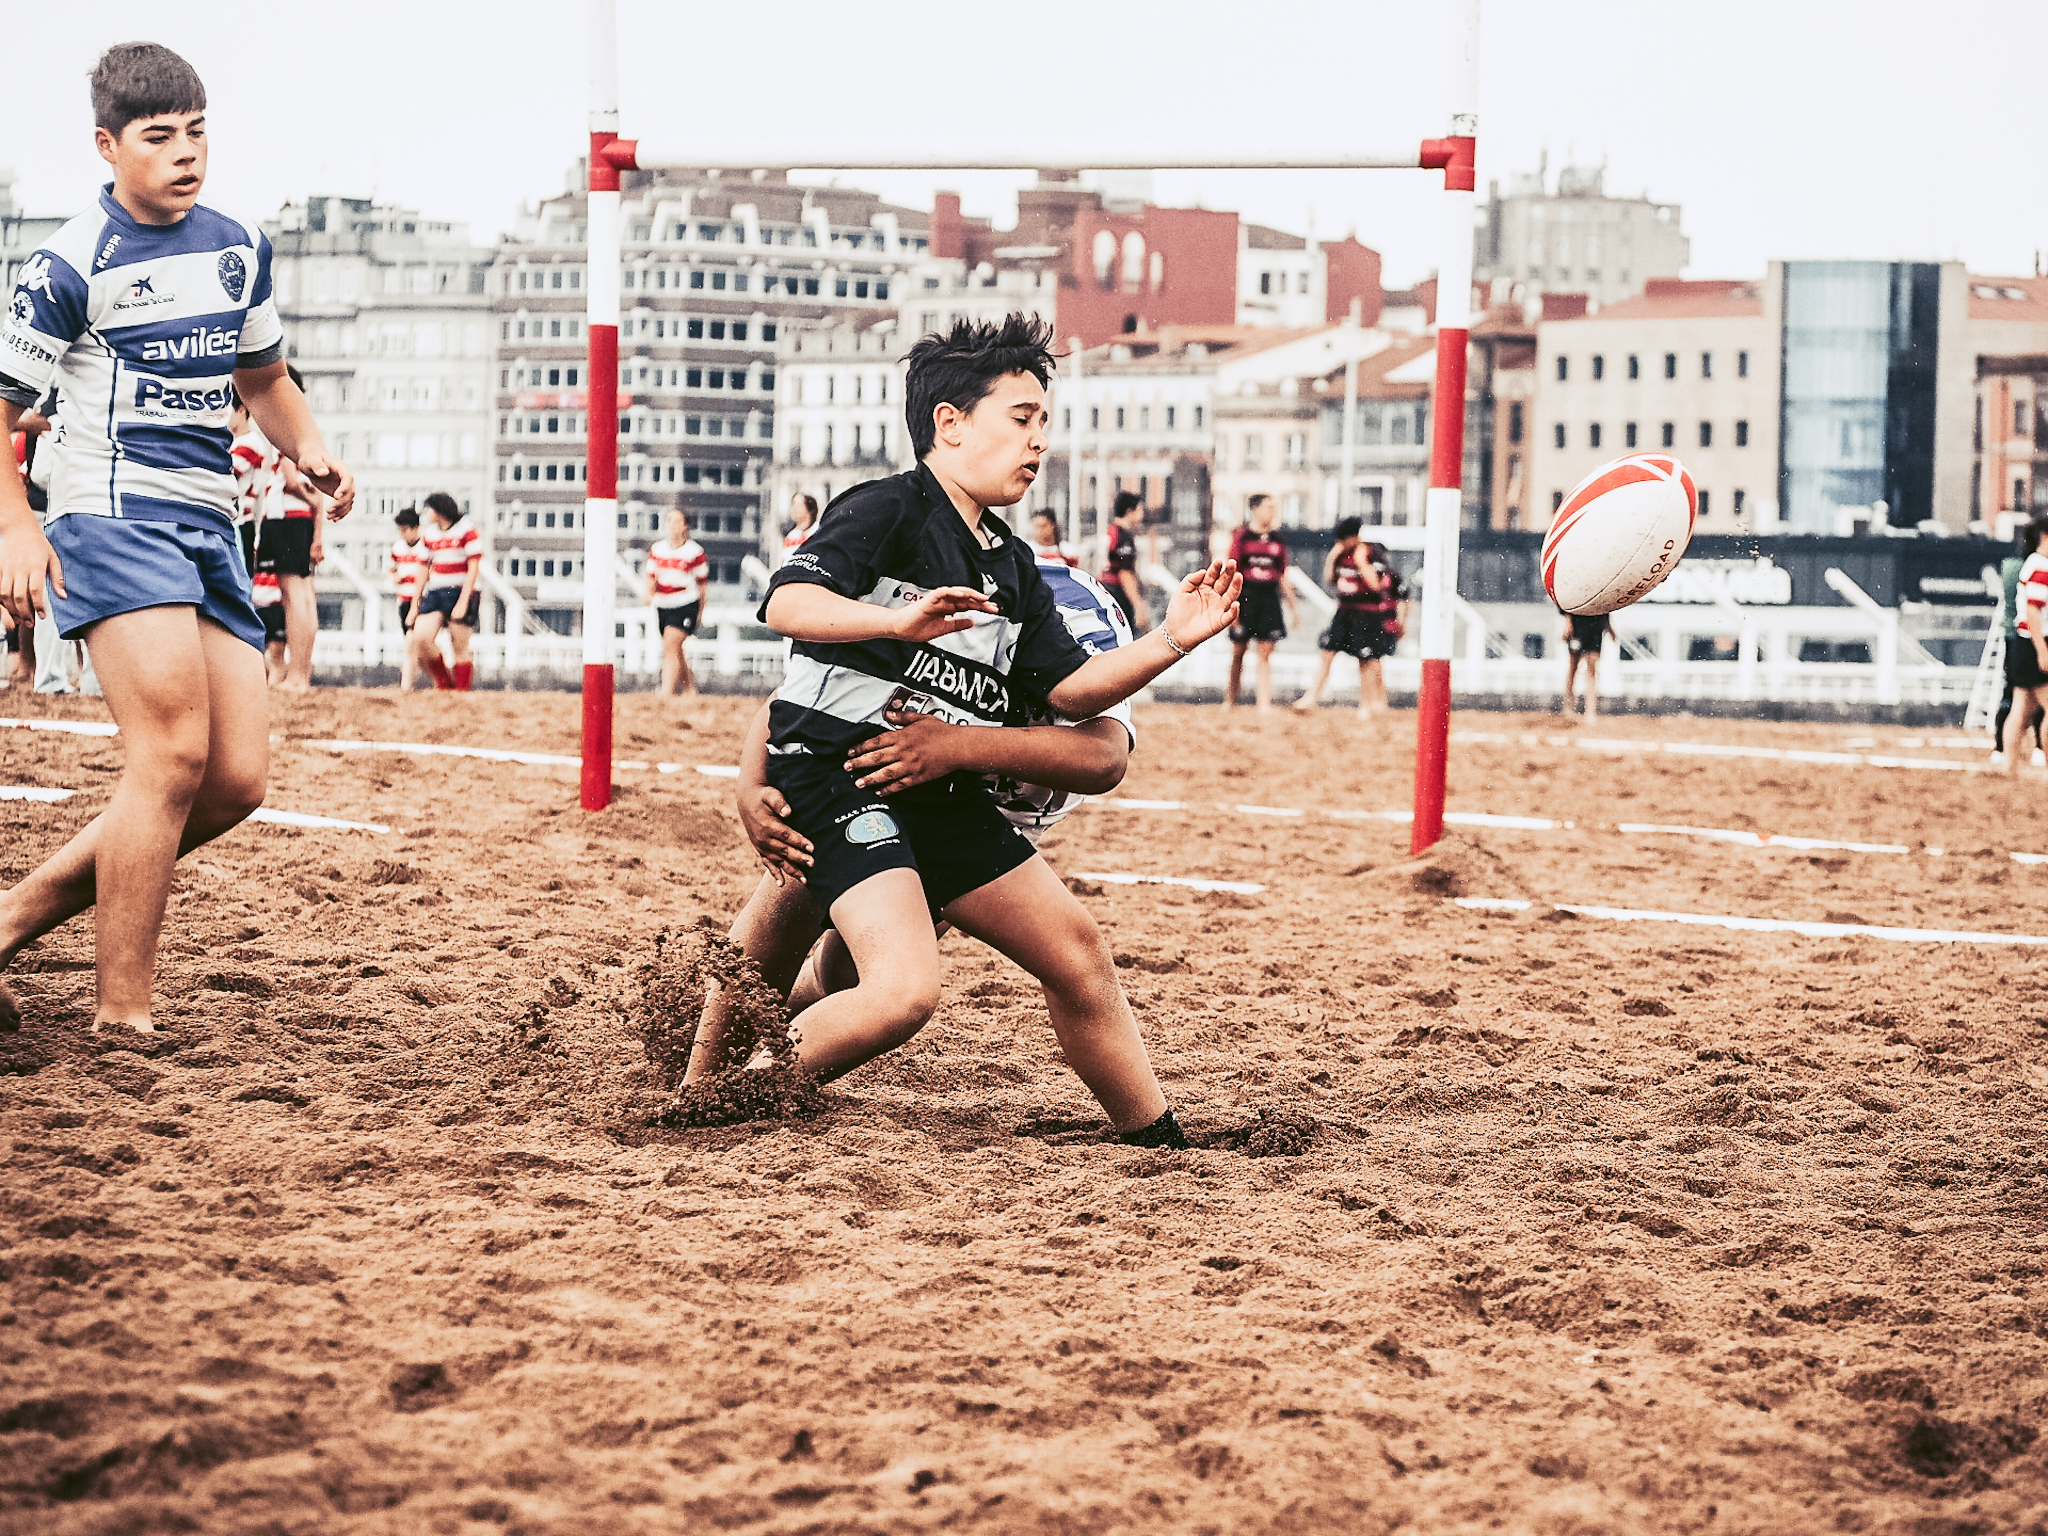 XII Torneo de Rugby Playa